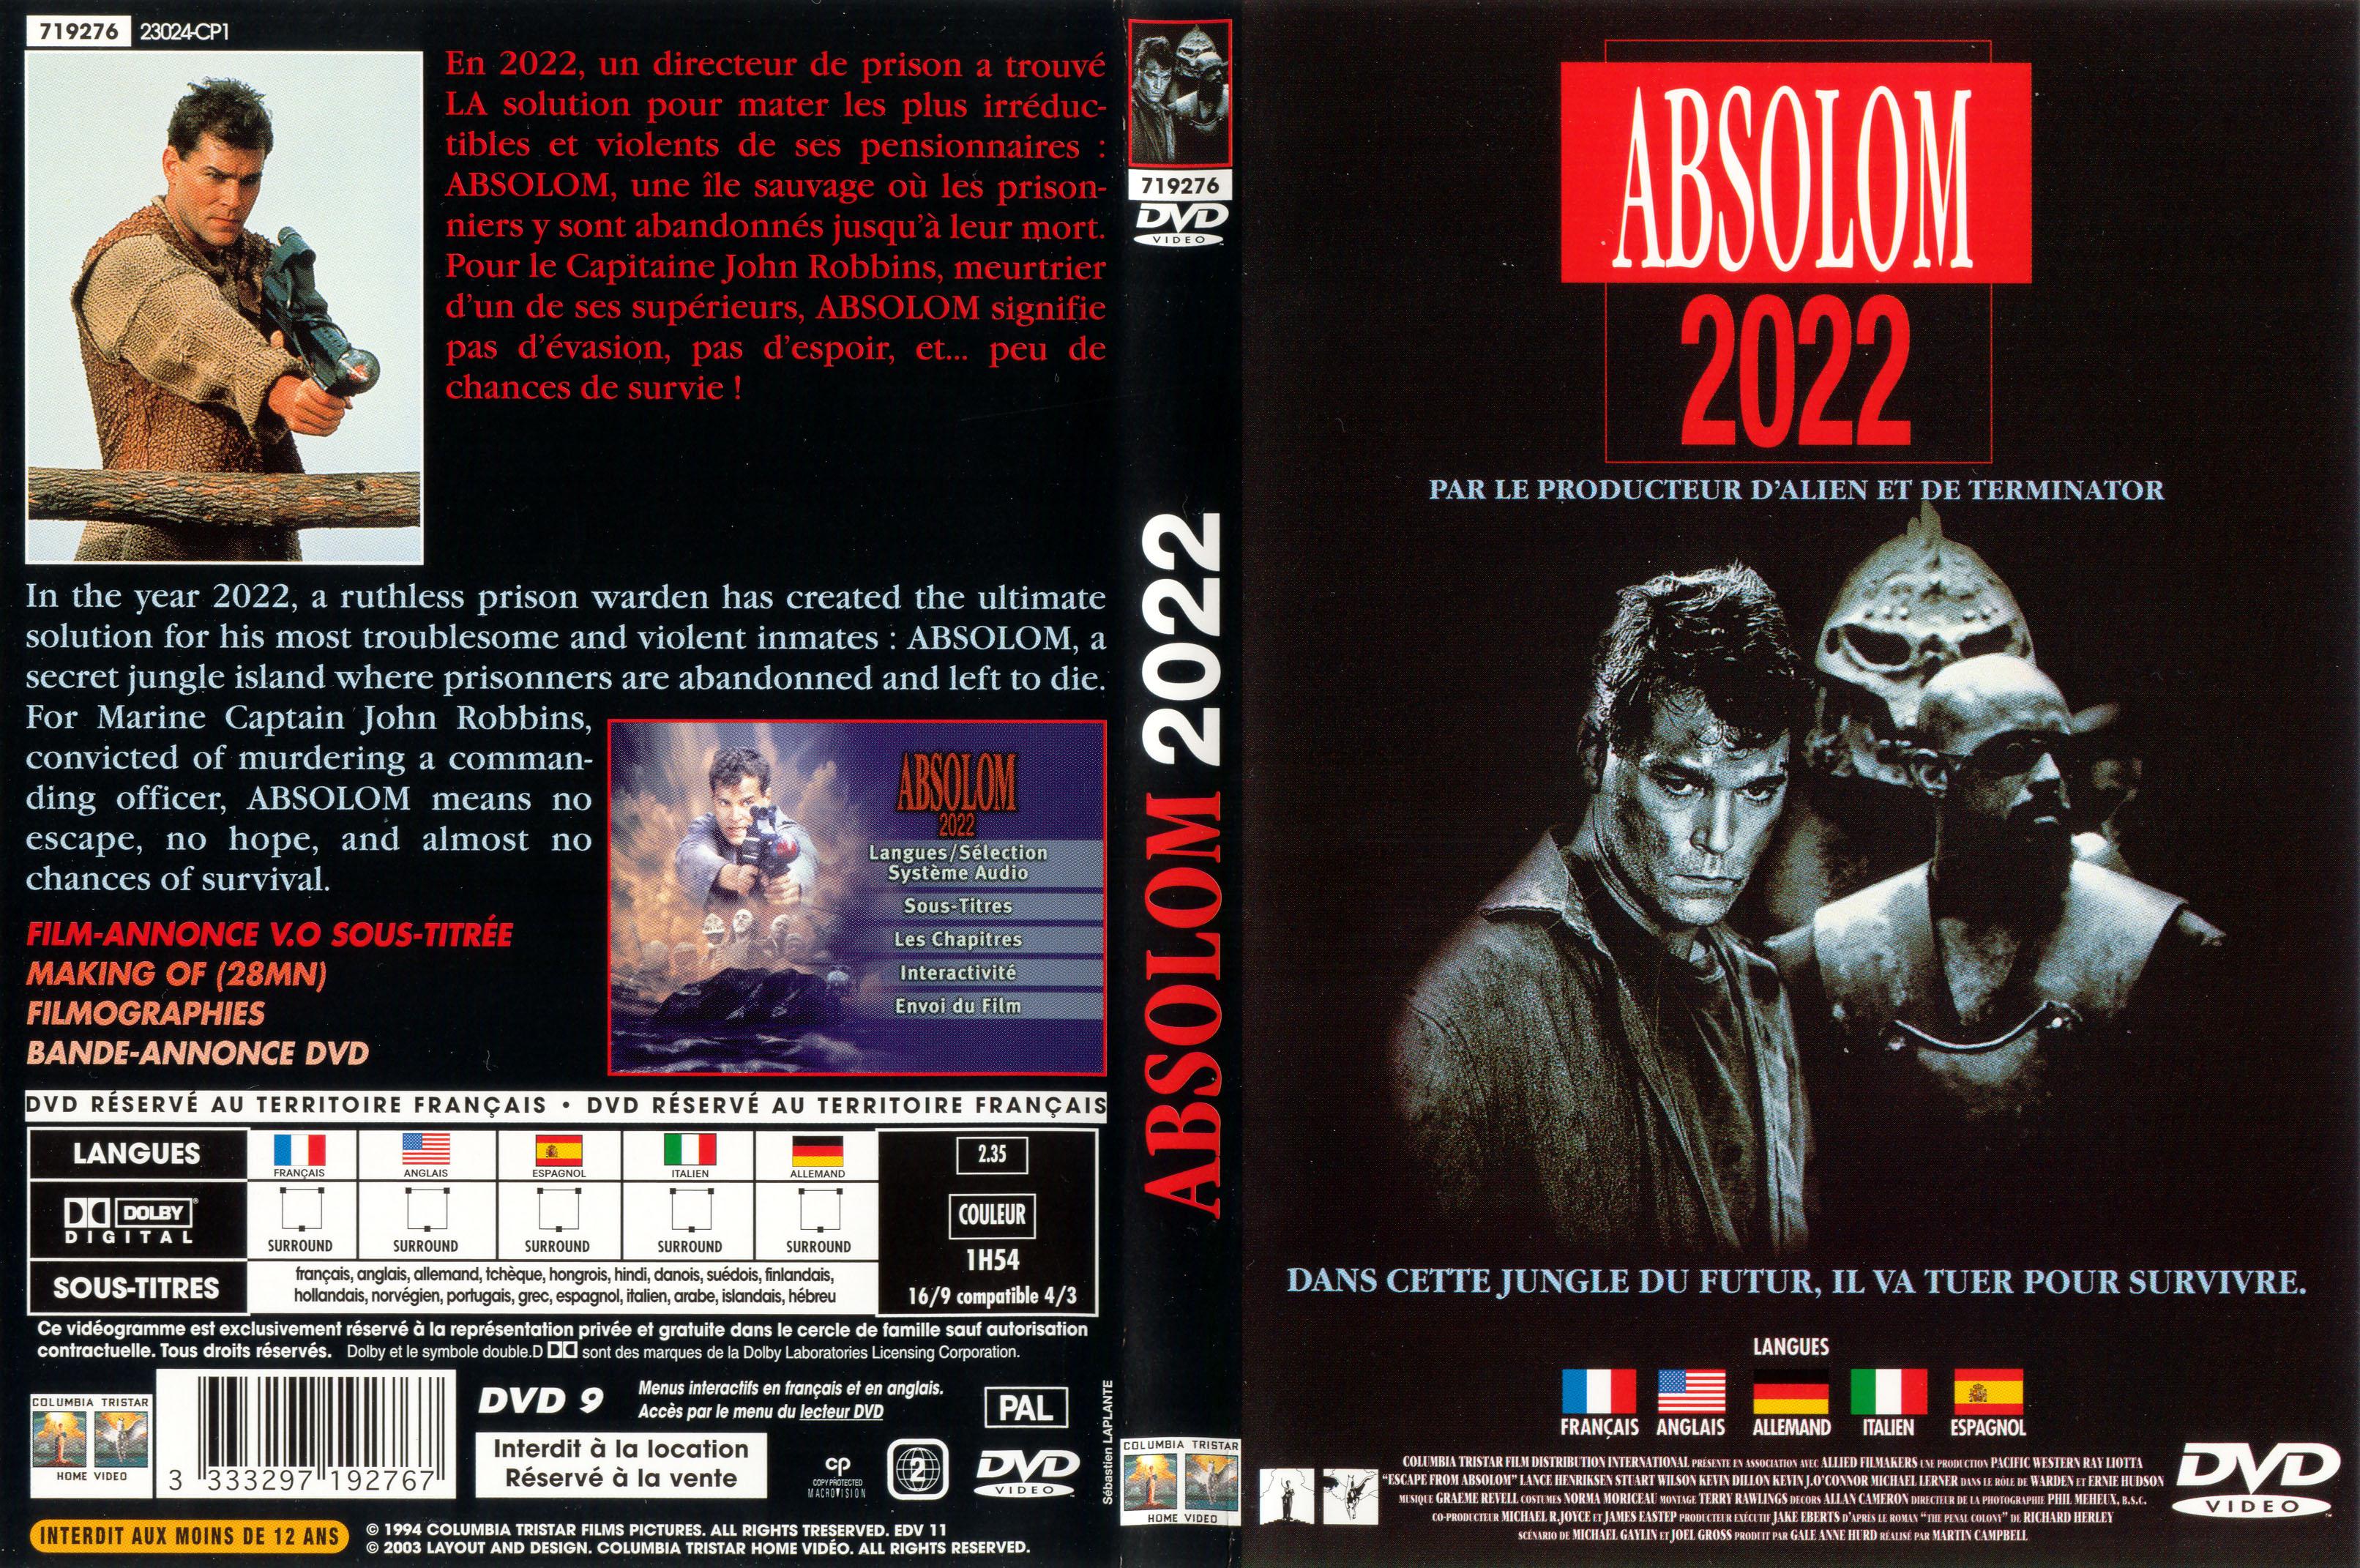 Jaquette DVD Absolom 2022